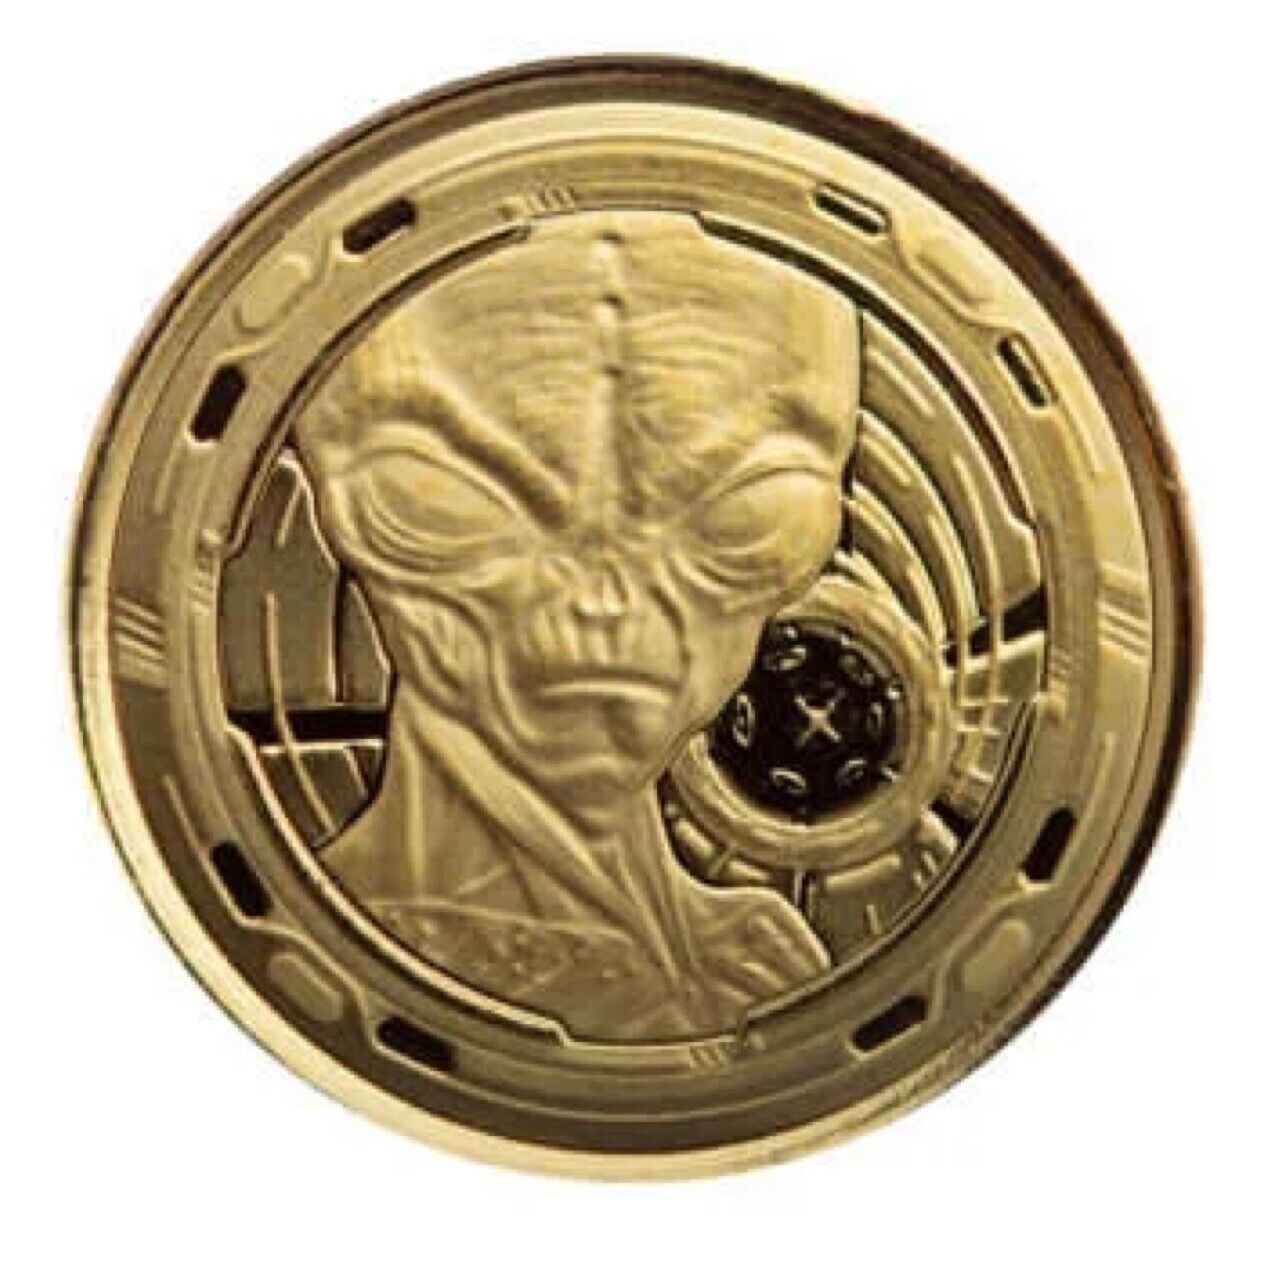 2022 The Ghana Alien Gold BU Encapsulated Coin - 1/10 oz. Pure Gold